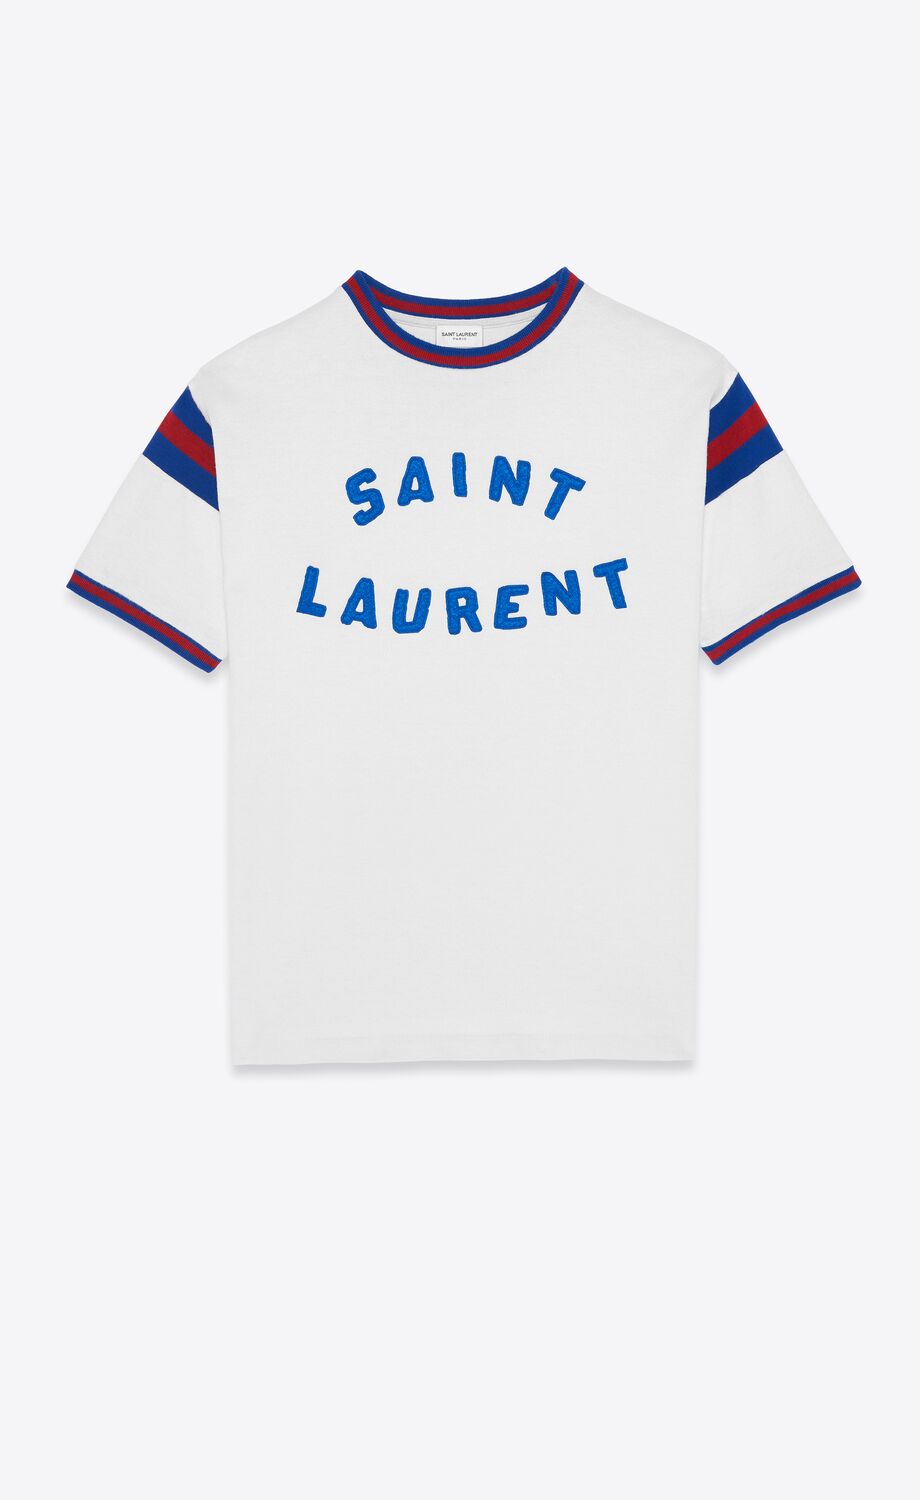 Saint Laurent - Similar stores, new products, store review, Q&A | Modvisor